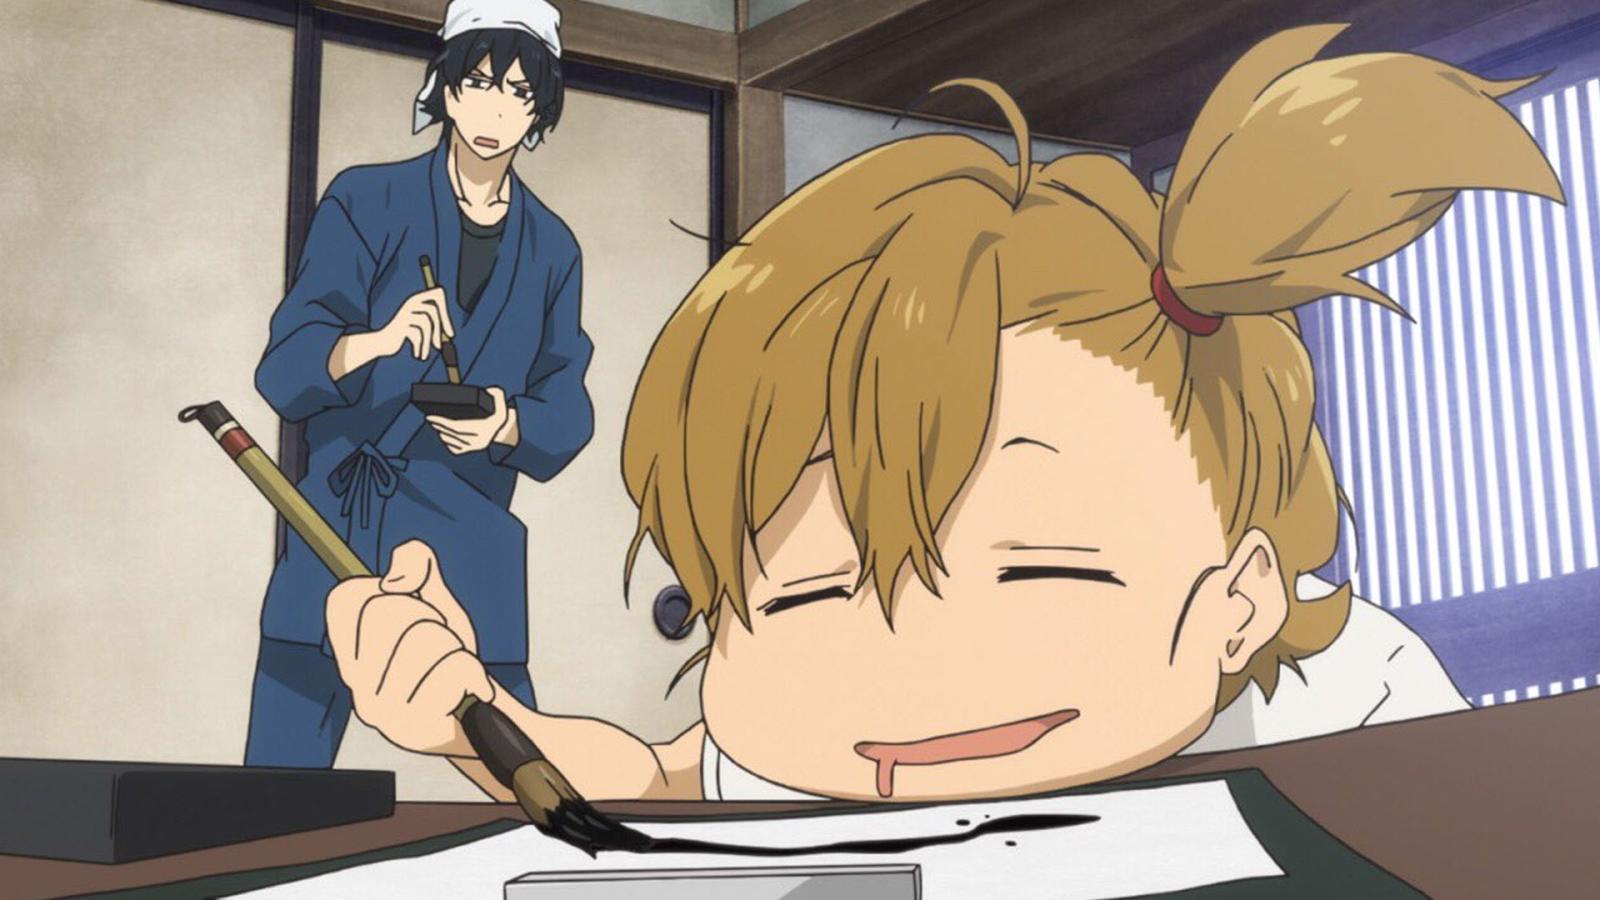 A Couple of Cuckoos Episode 4 - A Very Wholesome Episode - Anime Corner